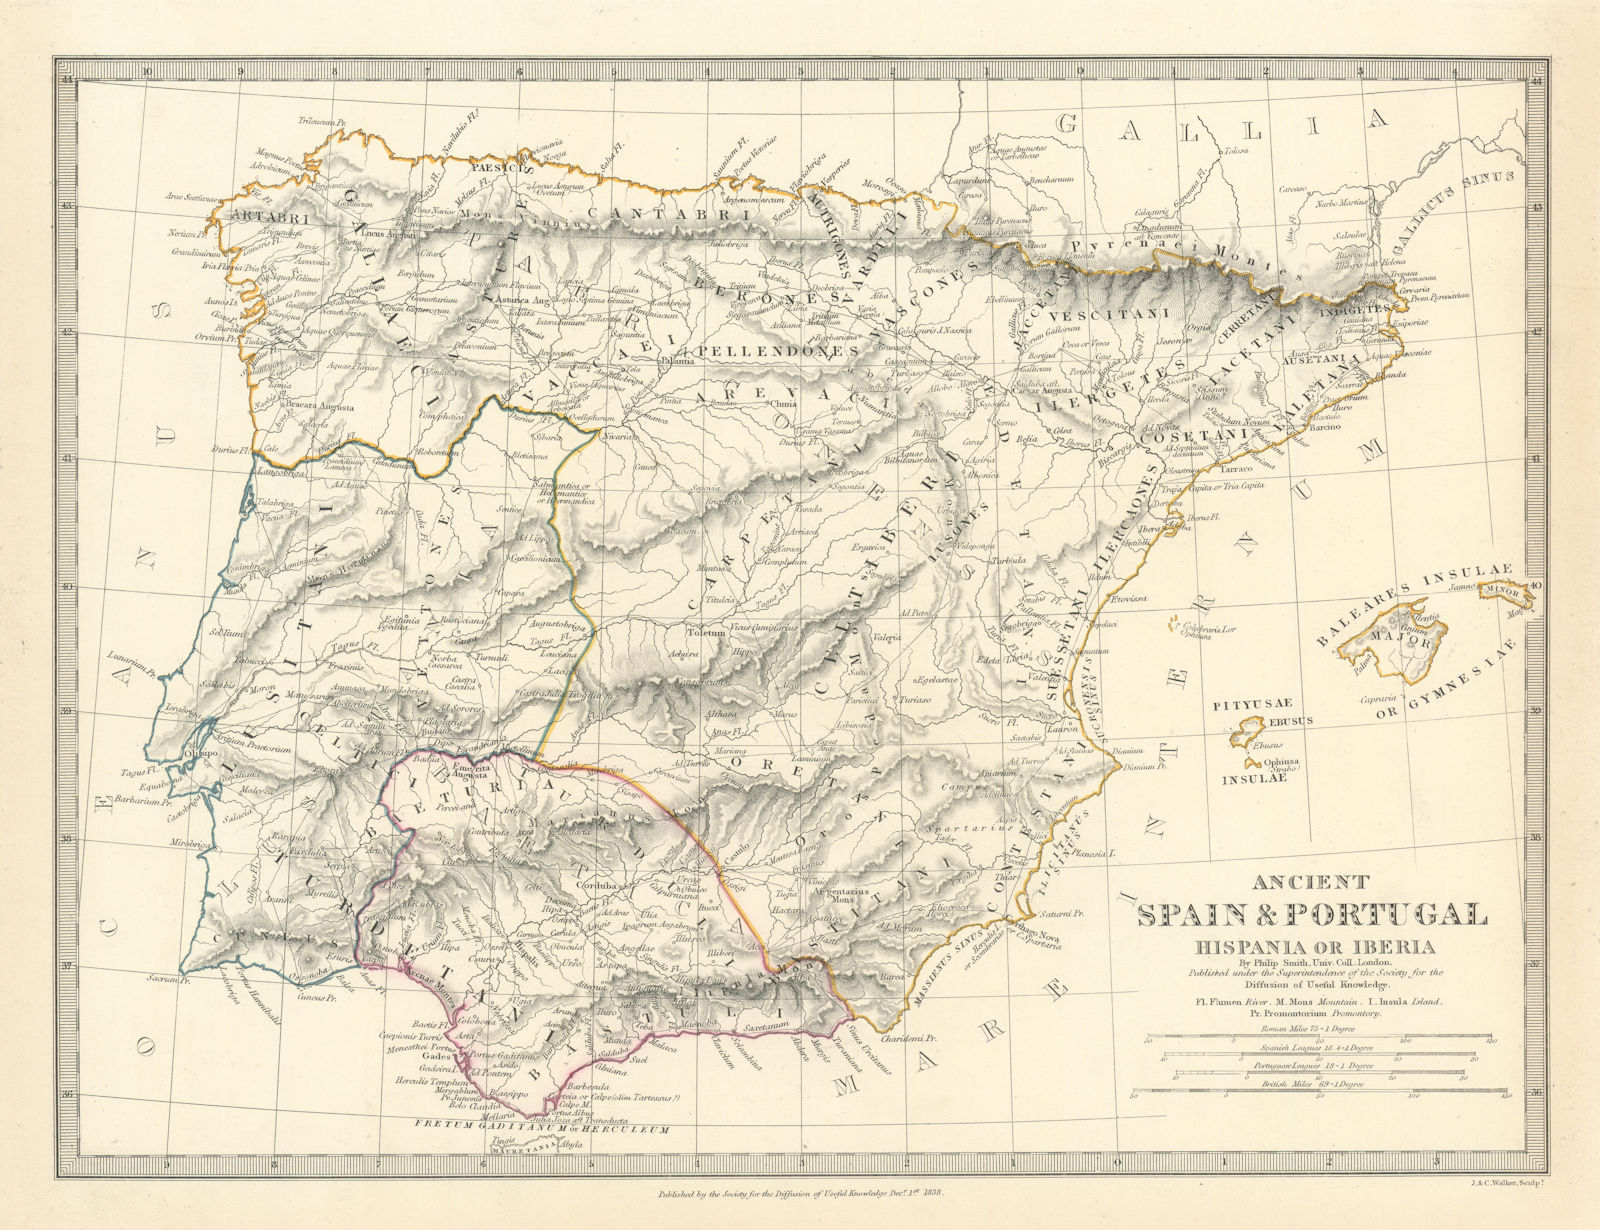 HISPANIA IBERIA. Ancient Spain & Portugal. Roman names & roads. SDUK 1844 map